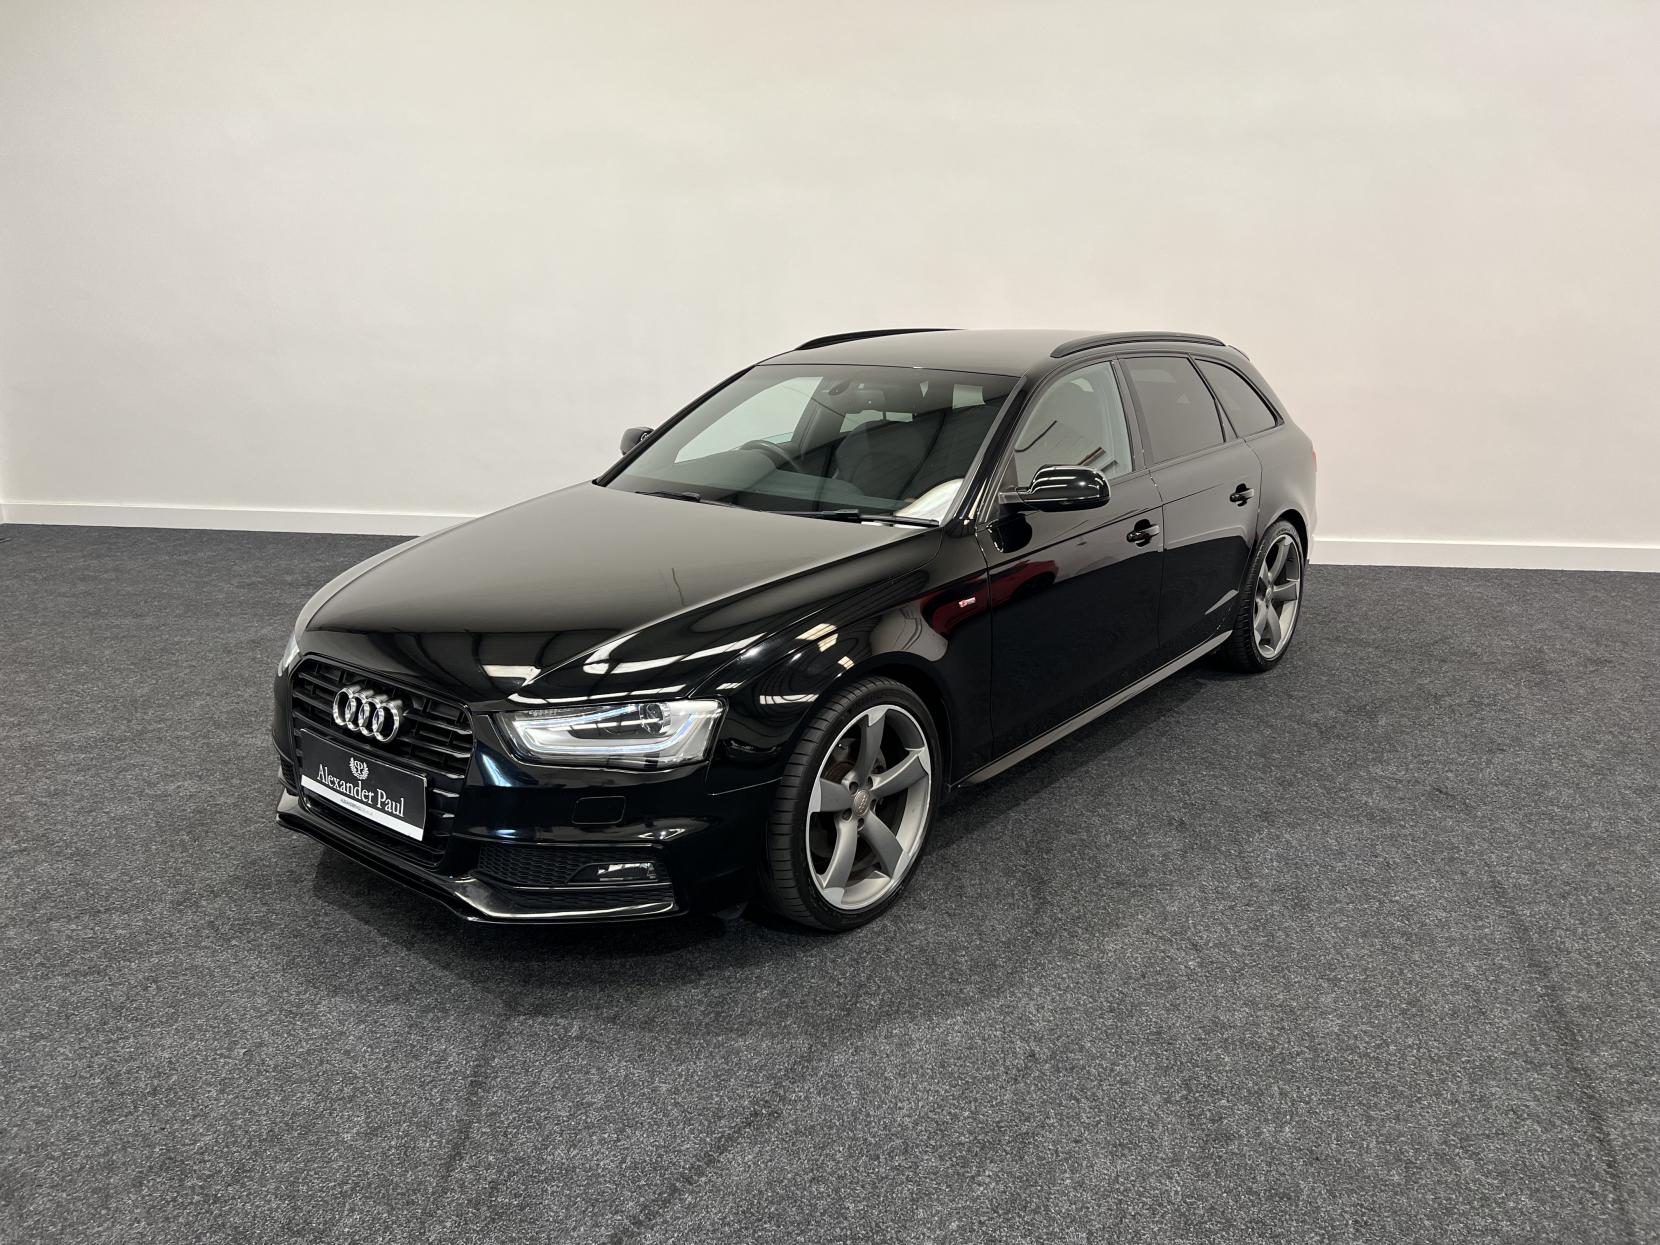 Audi A4 Avant 2.0 TDI Black Edition Estate 5dr Diesel Manual Euro 5 (s/s) (177 ps)